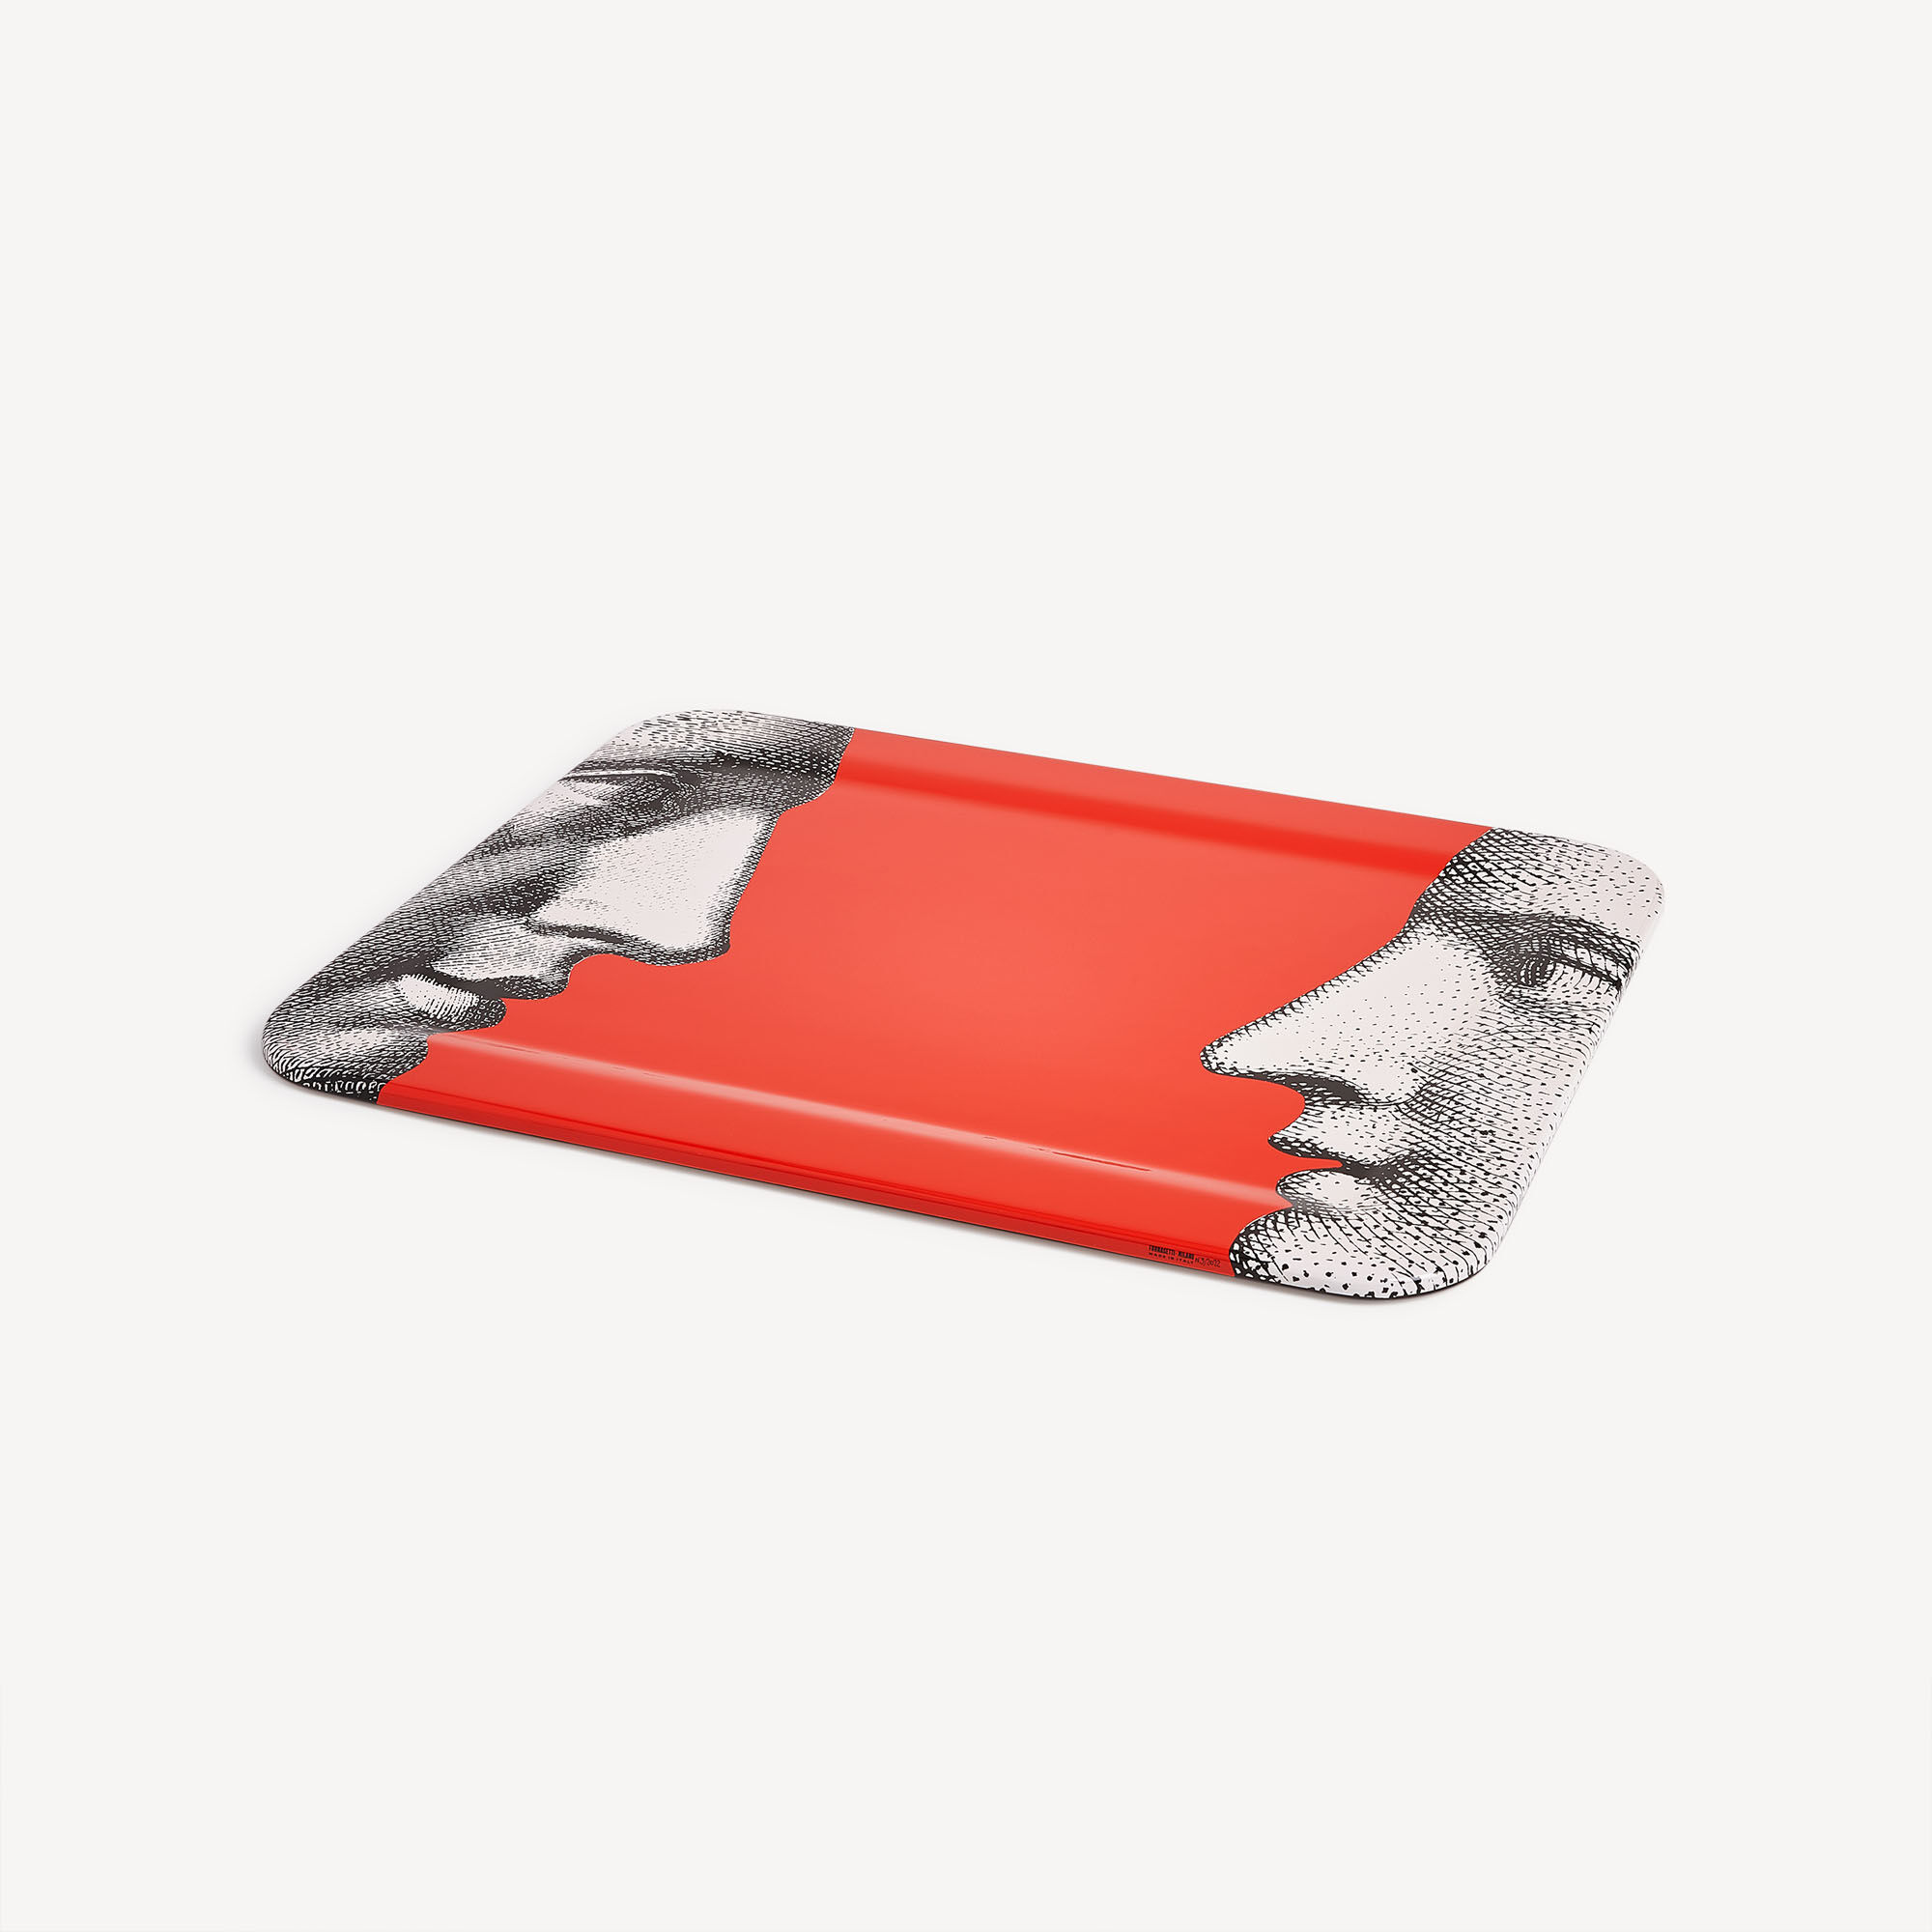 Fornasetti Profile tray - Red